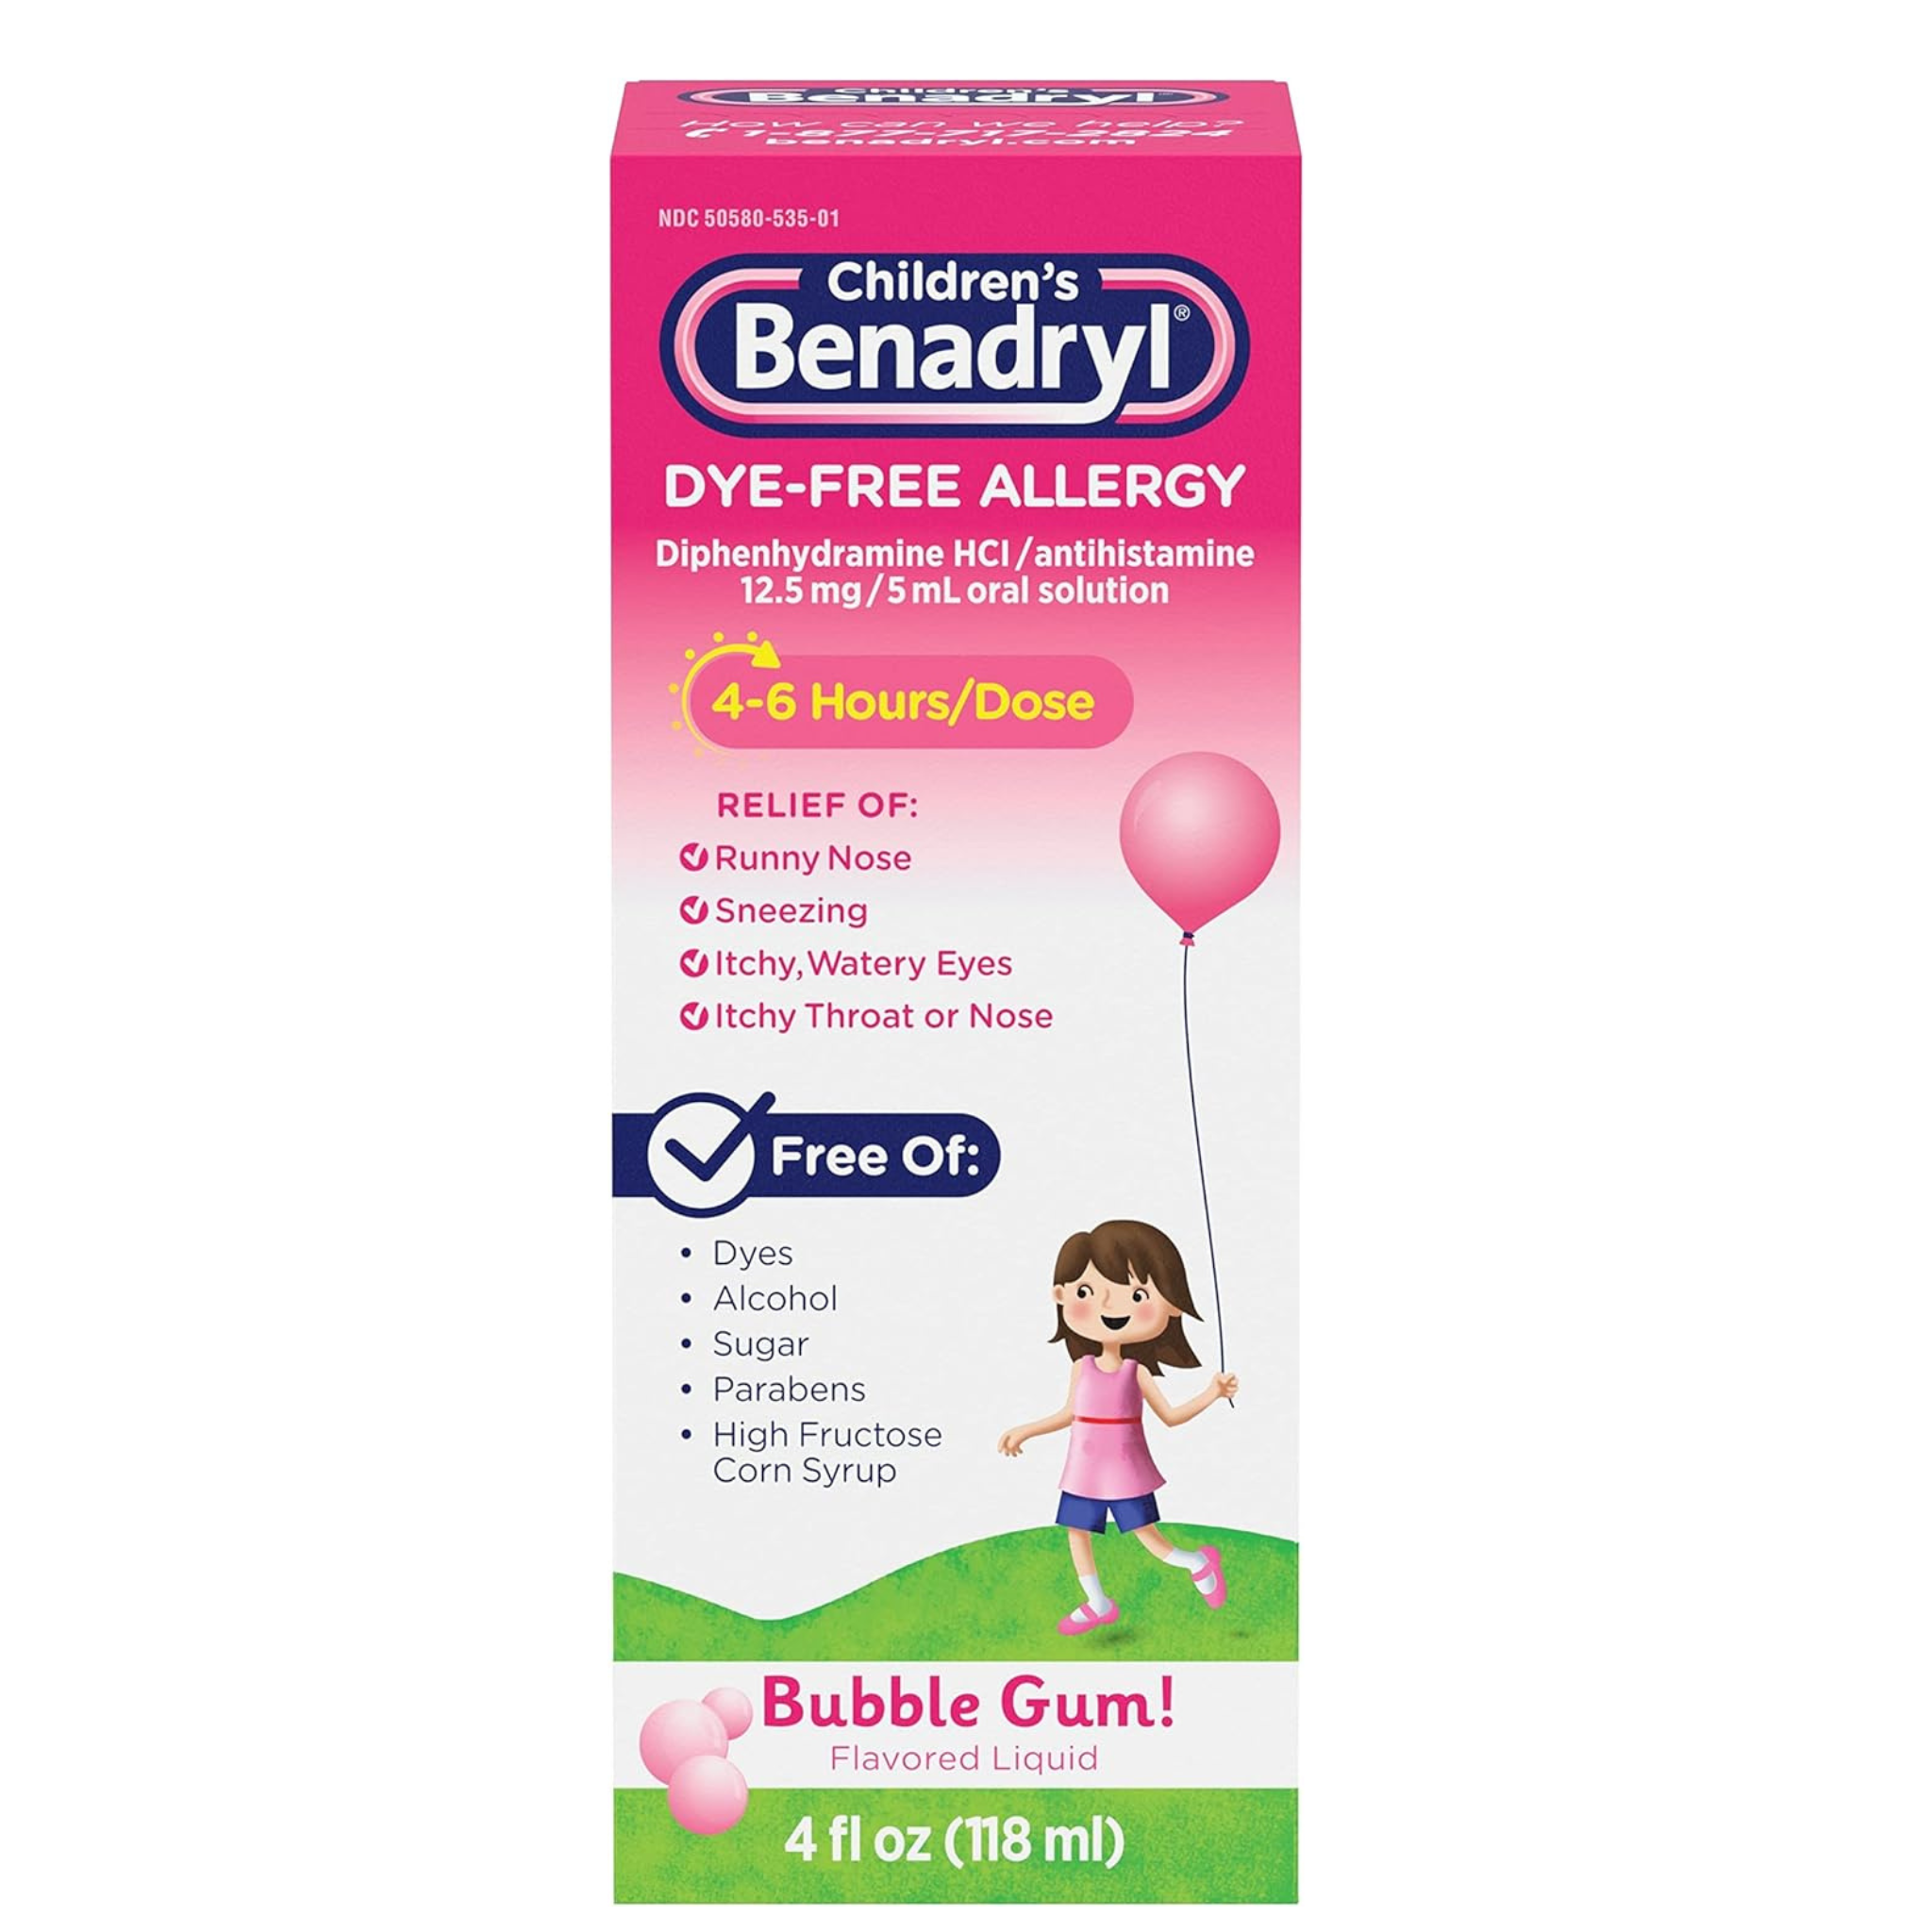 Benadryl Children’s Dye-Free Allergy Liquid Medication